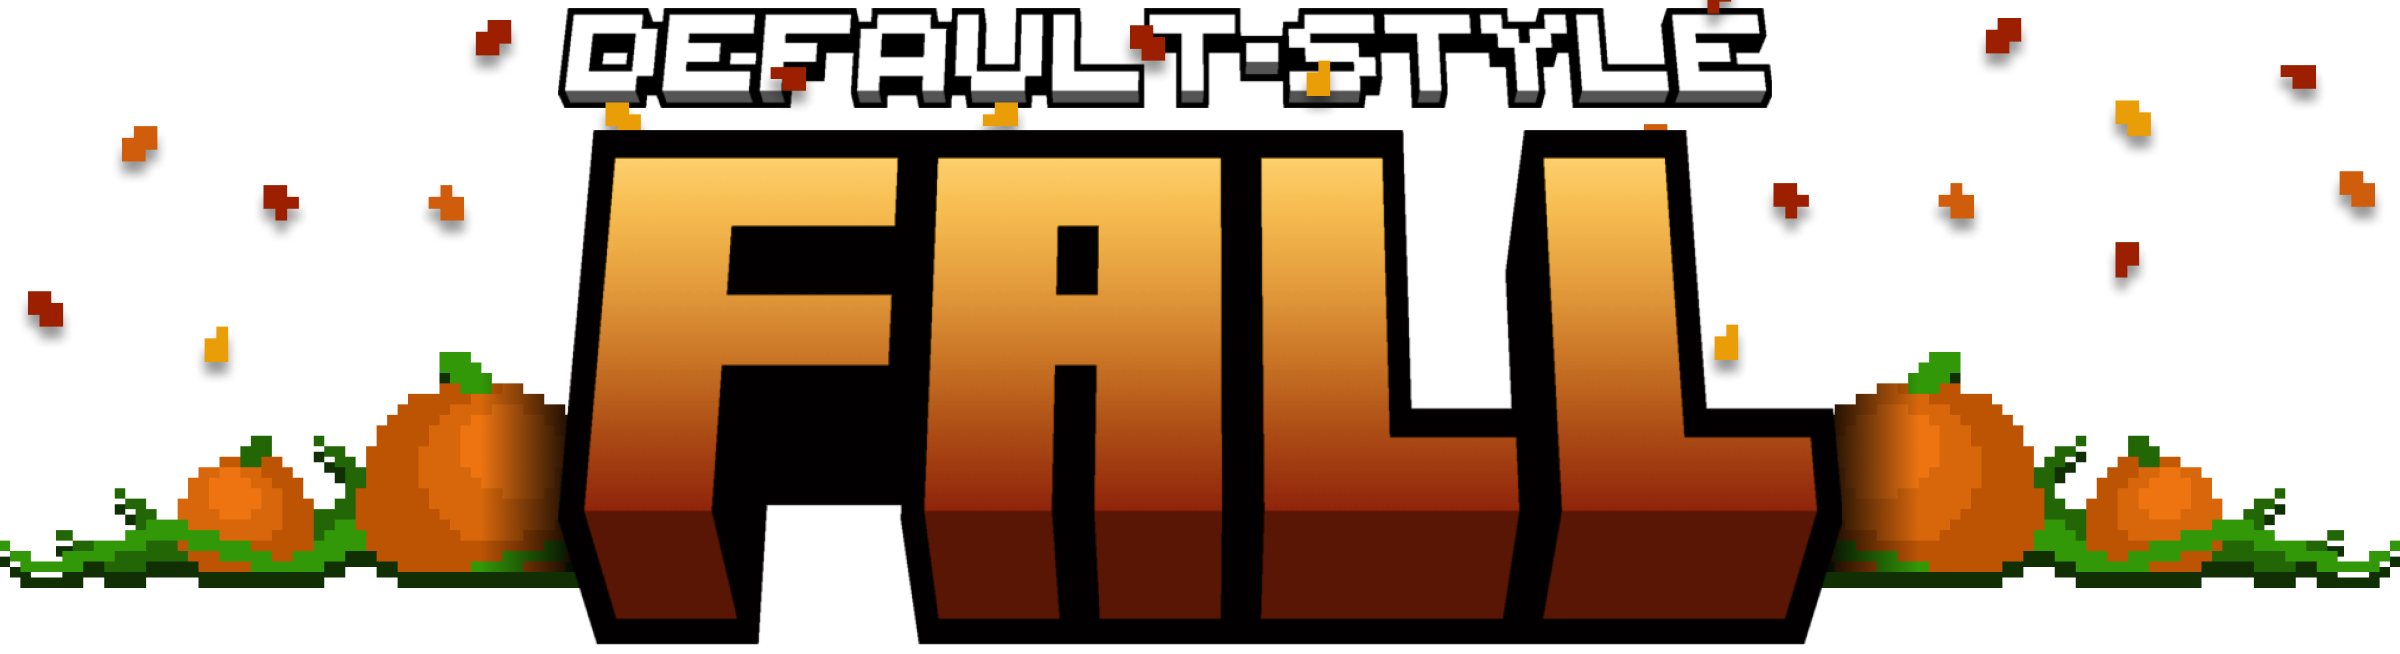 Default-Style Fall screenshot 1